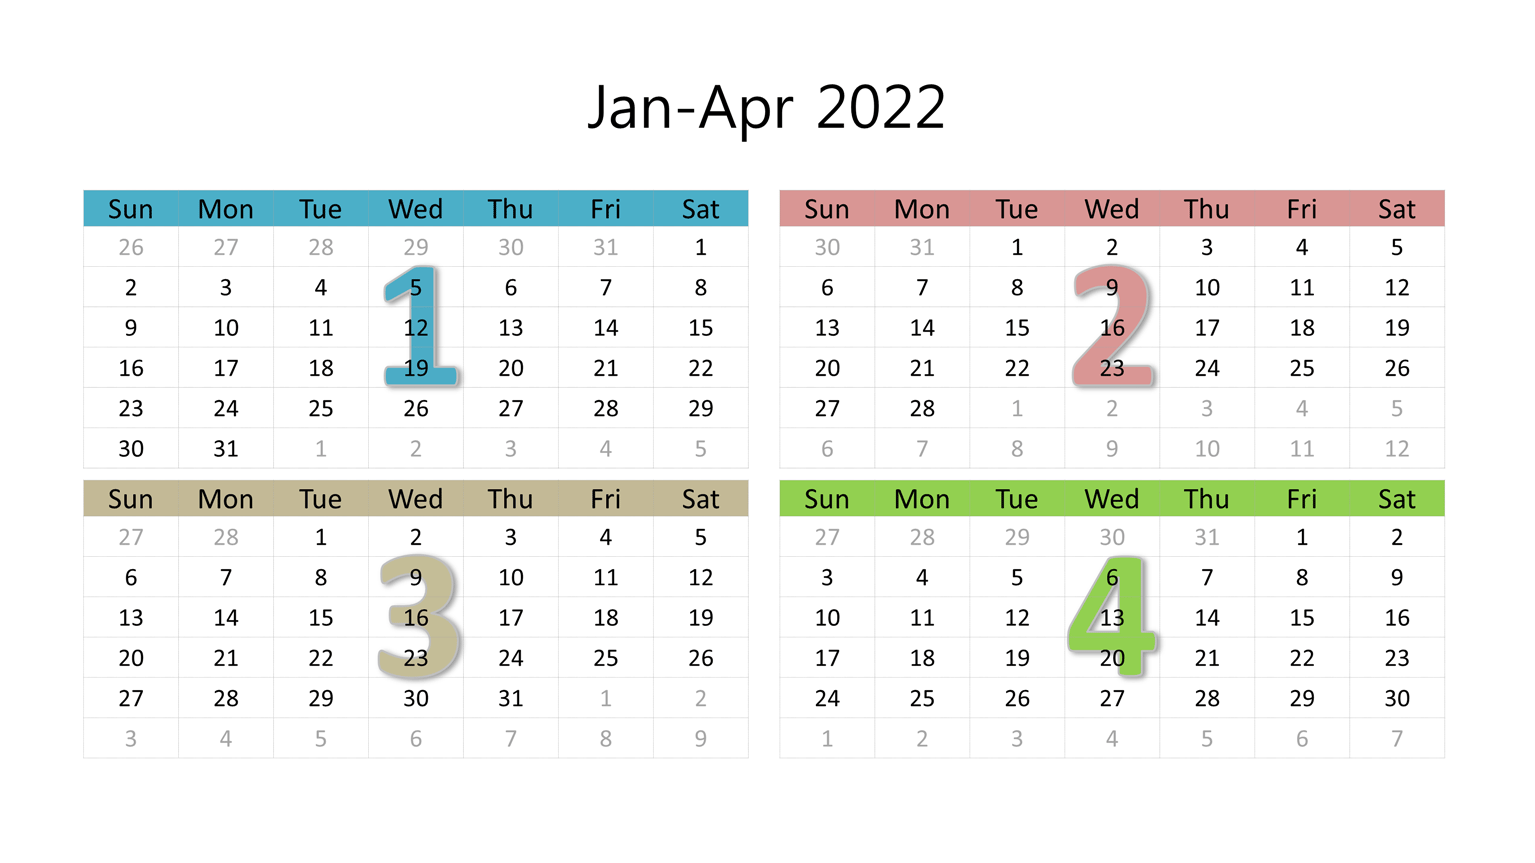 February 2022 calendar with holidays